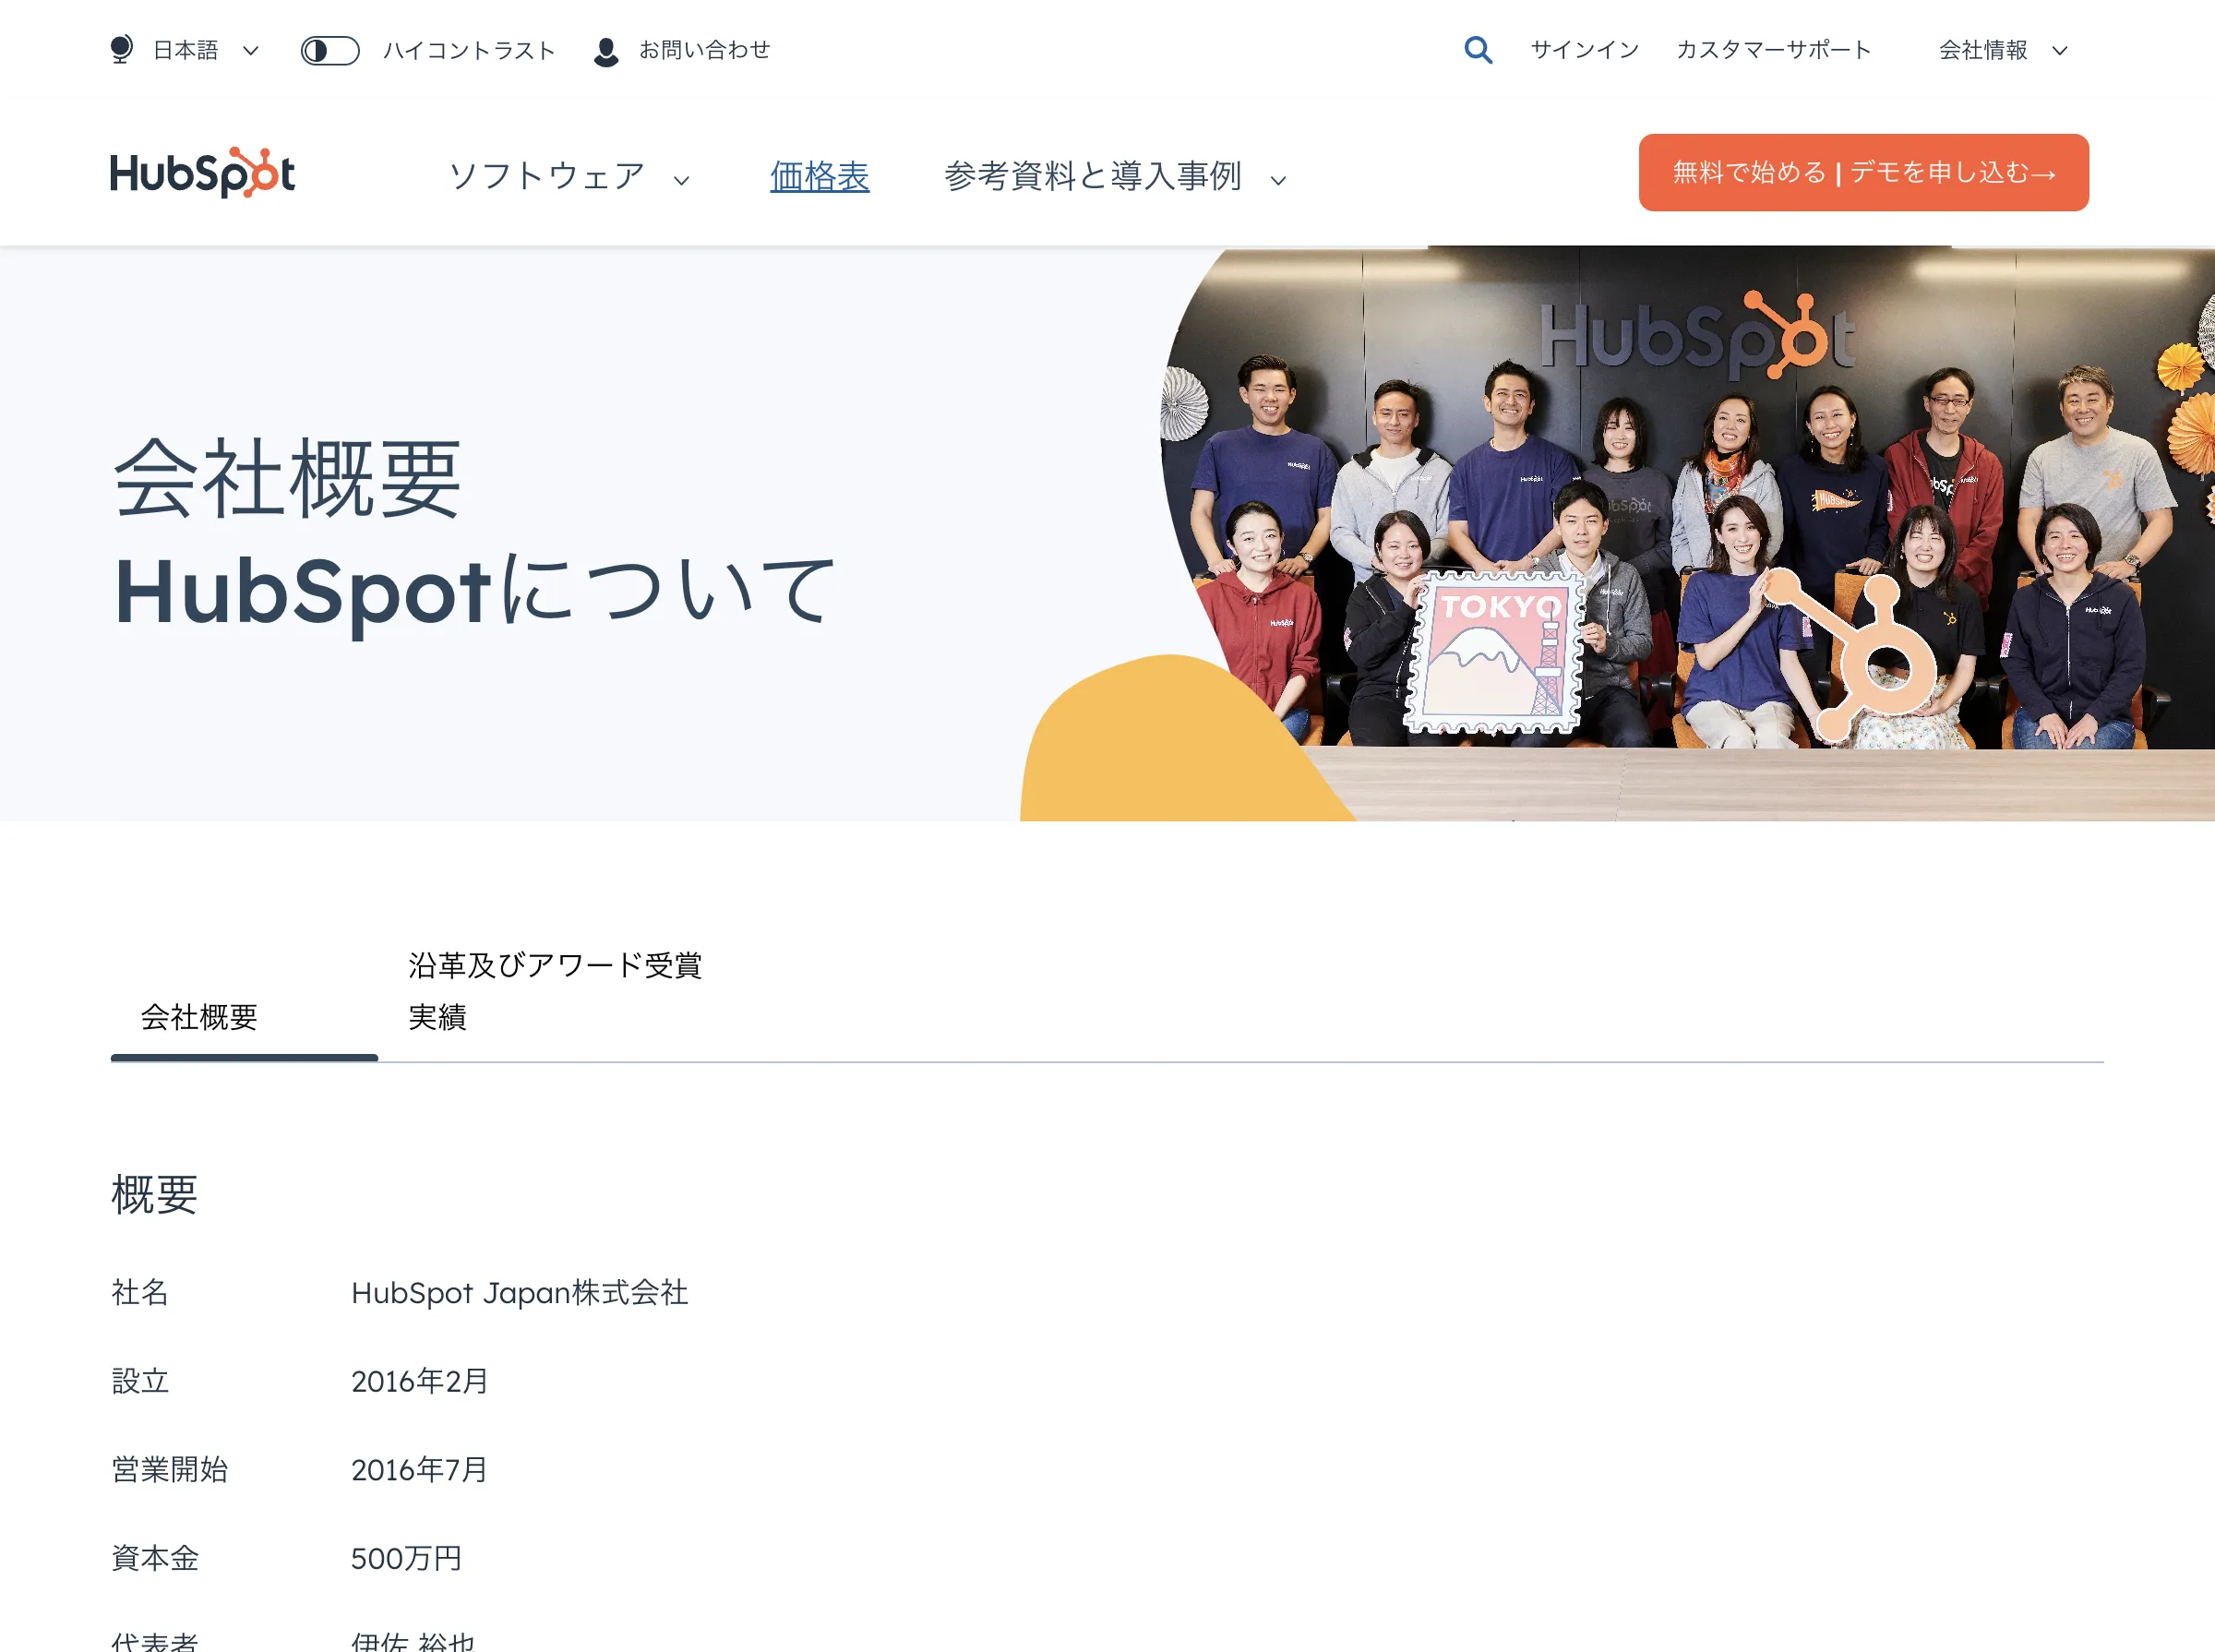 HubSpot Japan株式会社_image